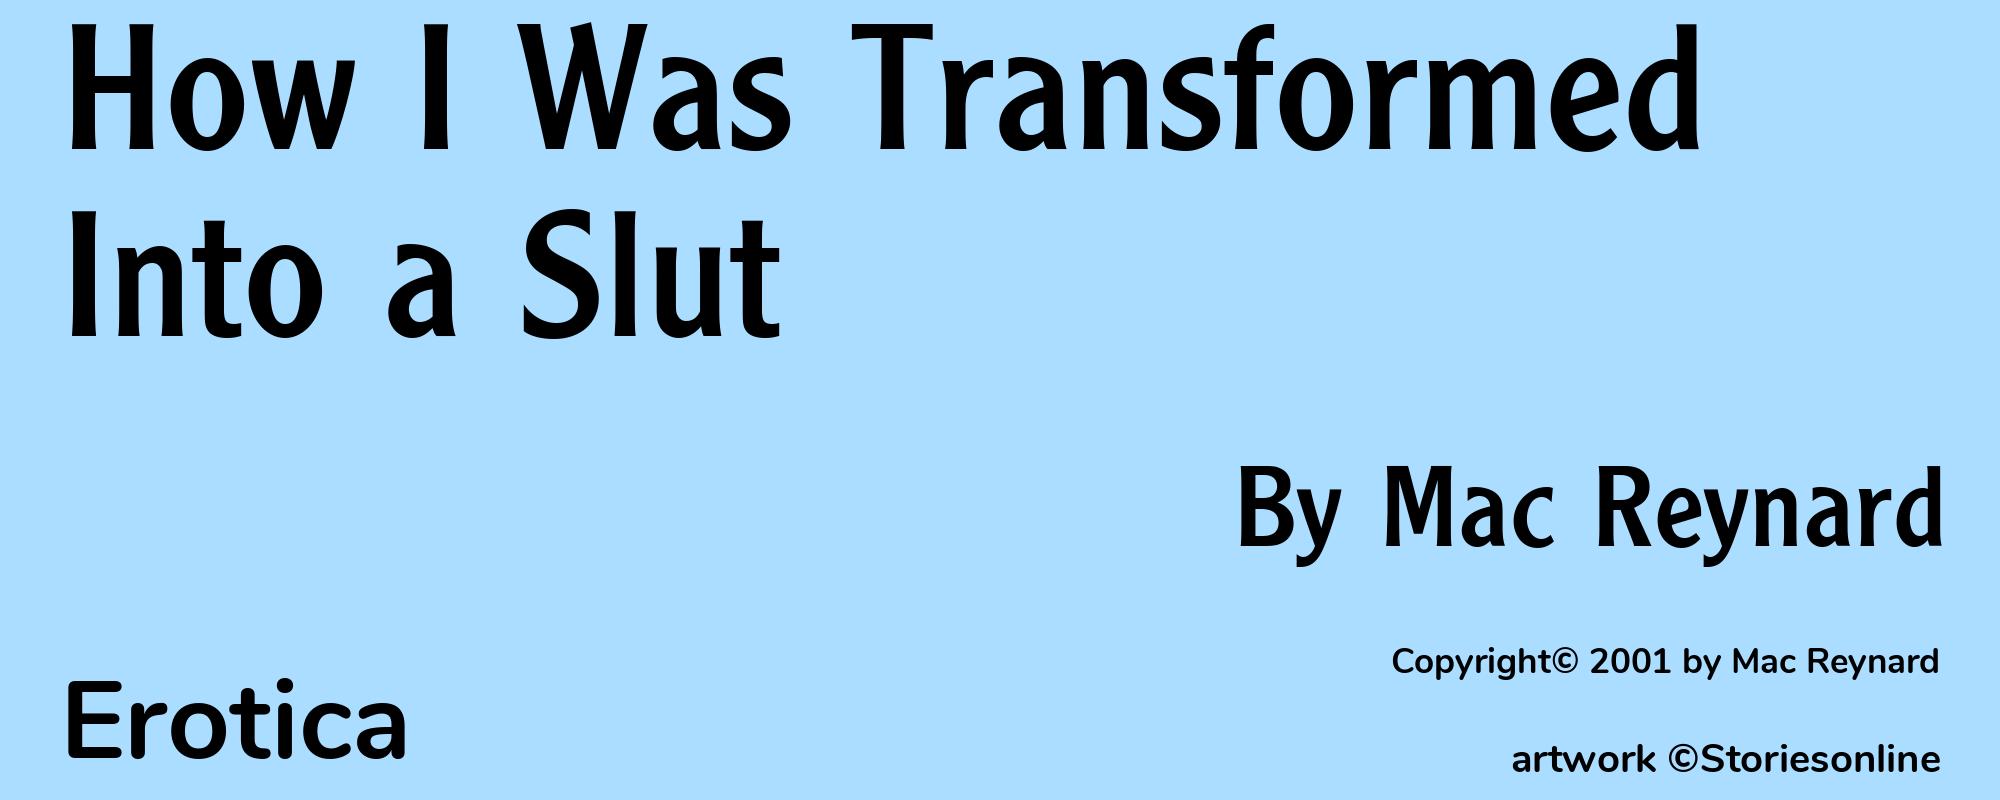 How I Was Transformed Into a Slut - Cover